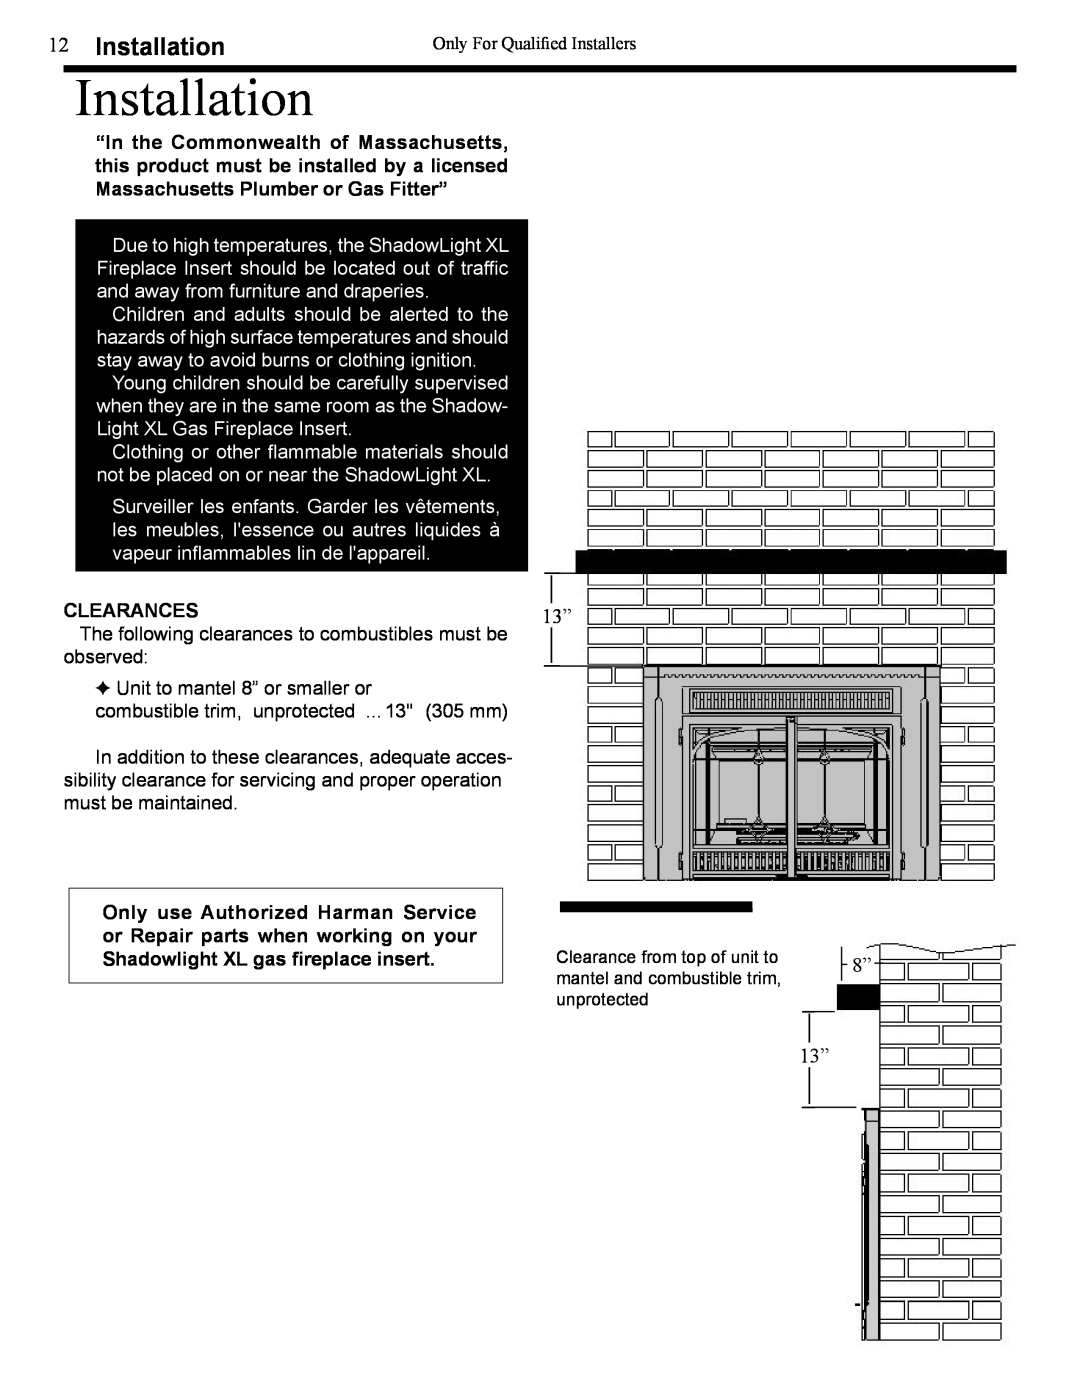 Harman Stove Company XL owner manual 12Installation, 8” 13”, Clearances 